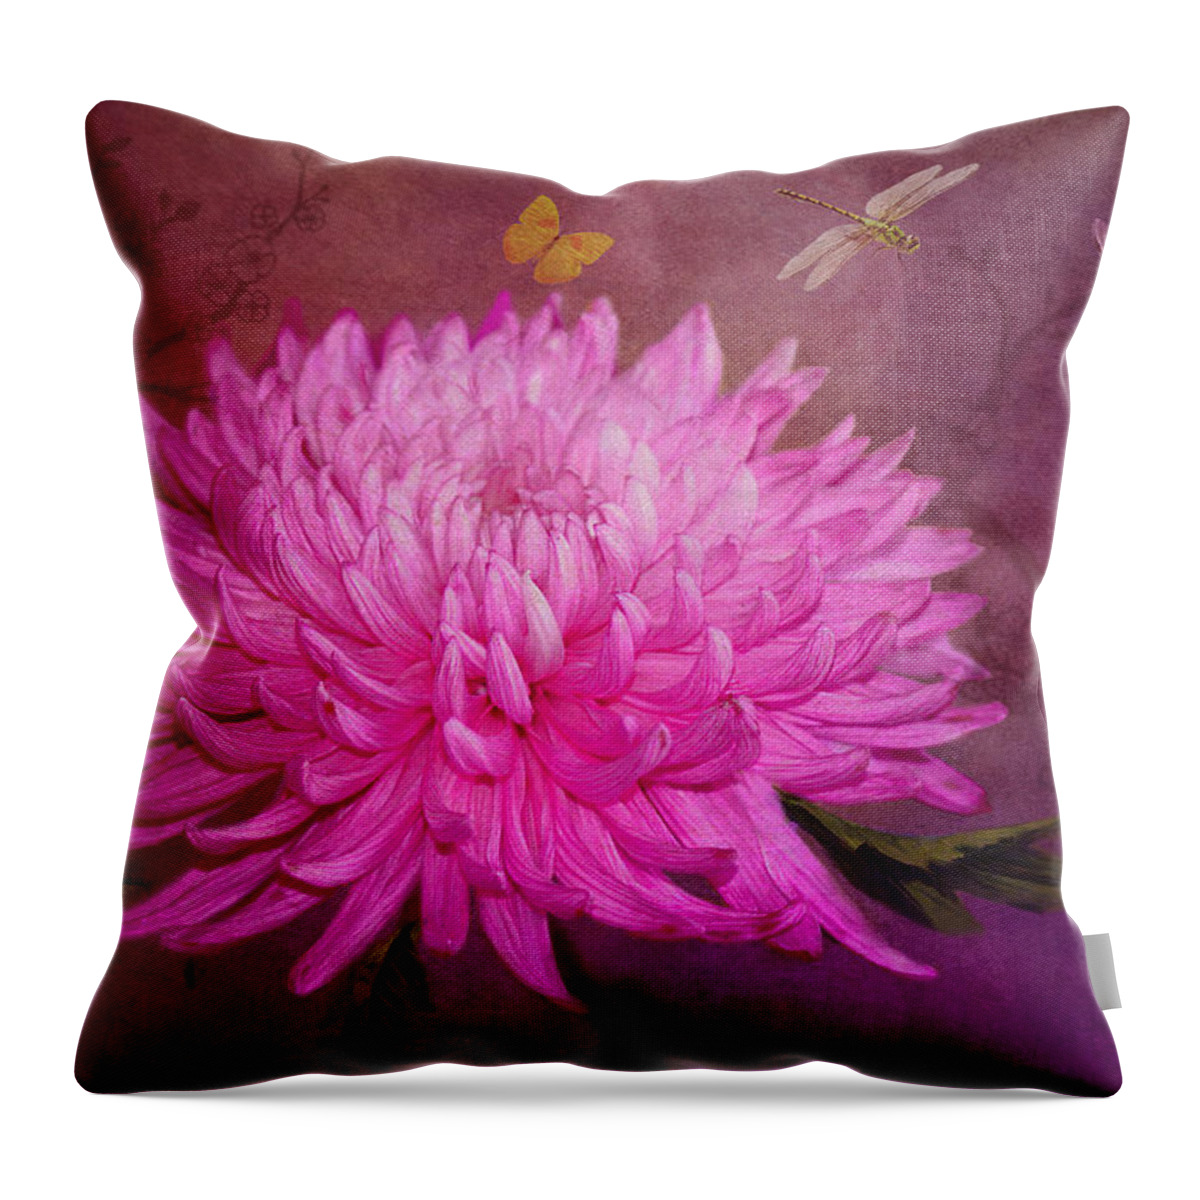 Chrysanthemum Throw Pillow featuring the photograph Moondance by Marina Kojukhova